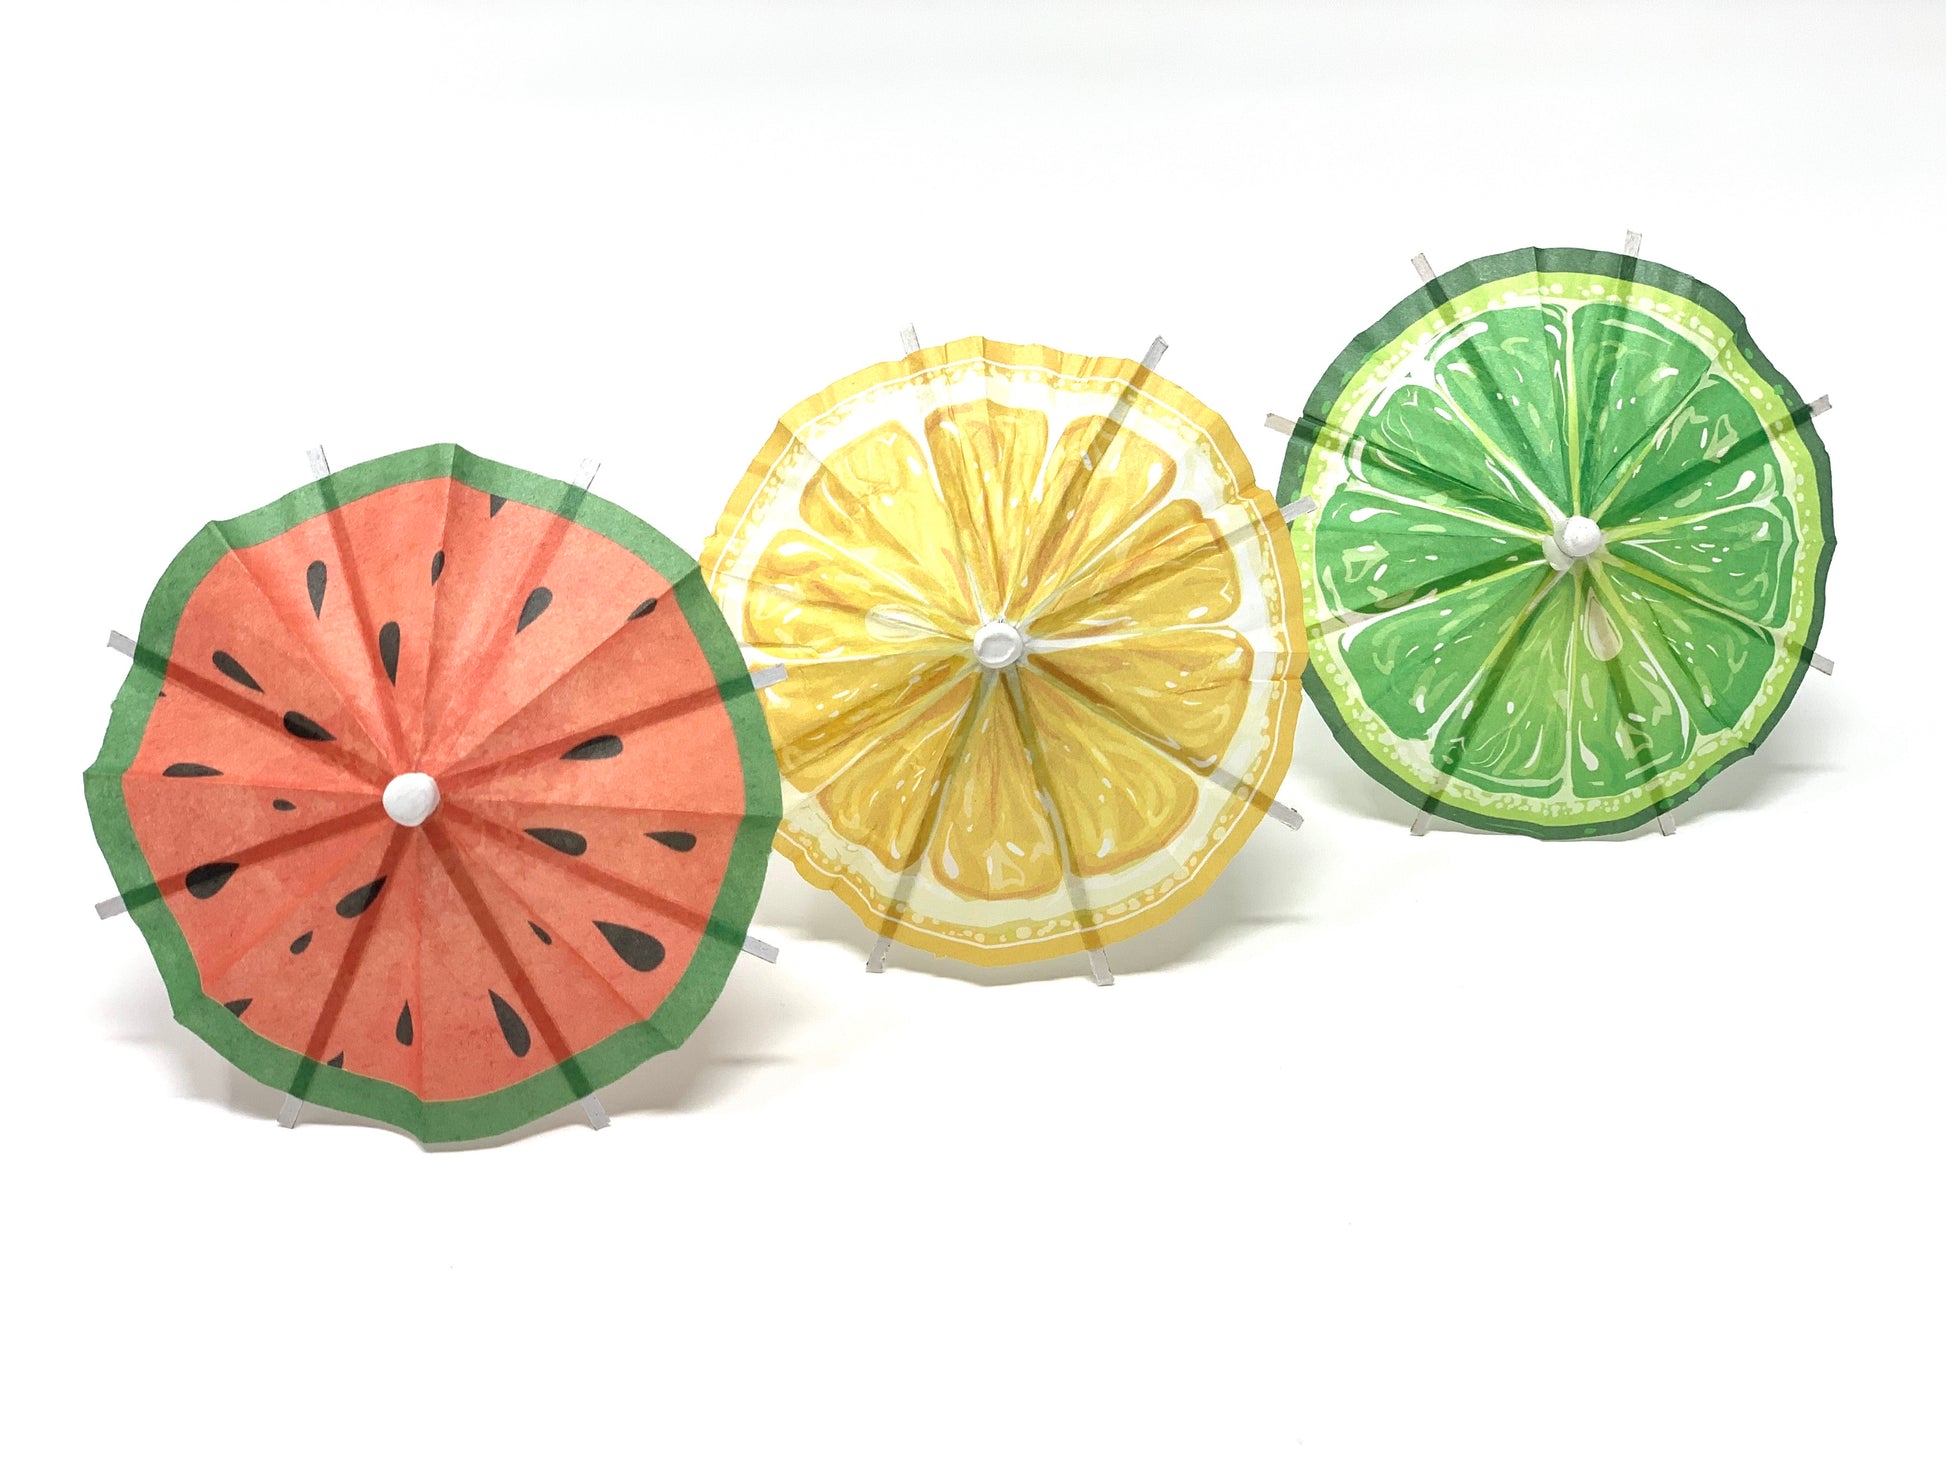 Fruit Salad Variety Pack - The Tiny Umbrella